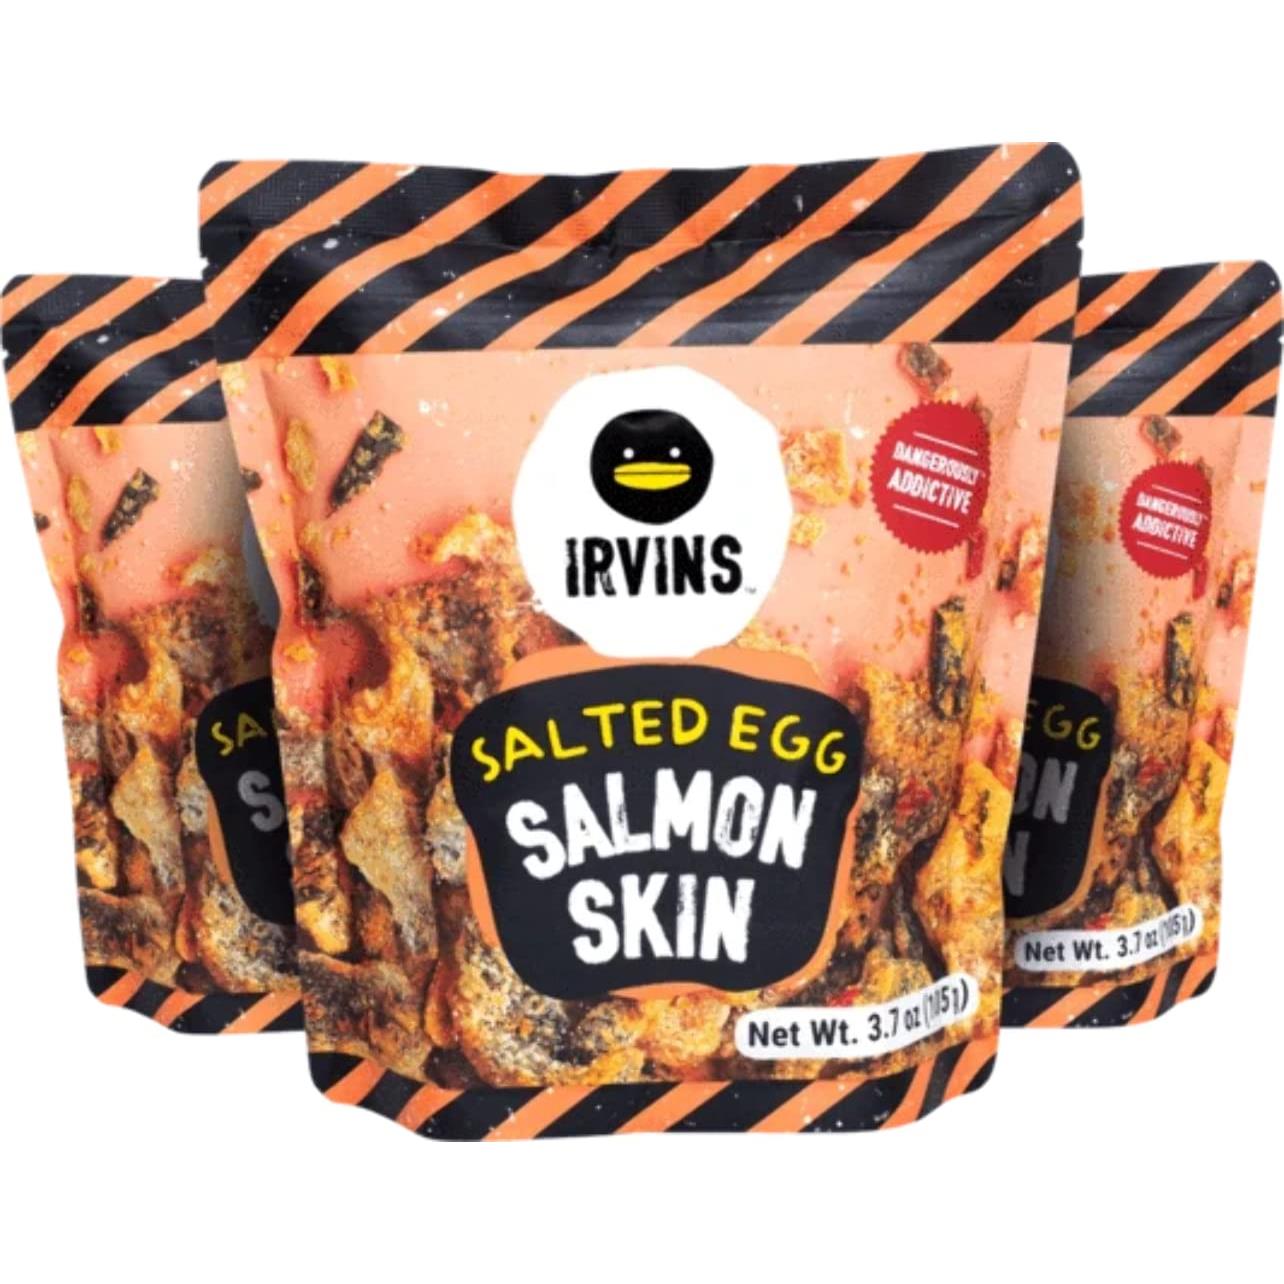 IRVINS Salted Egg Salmon Skin (Pack of 3)